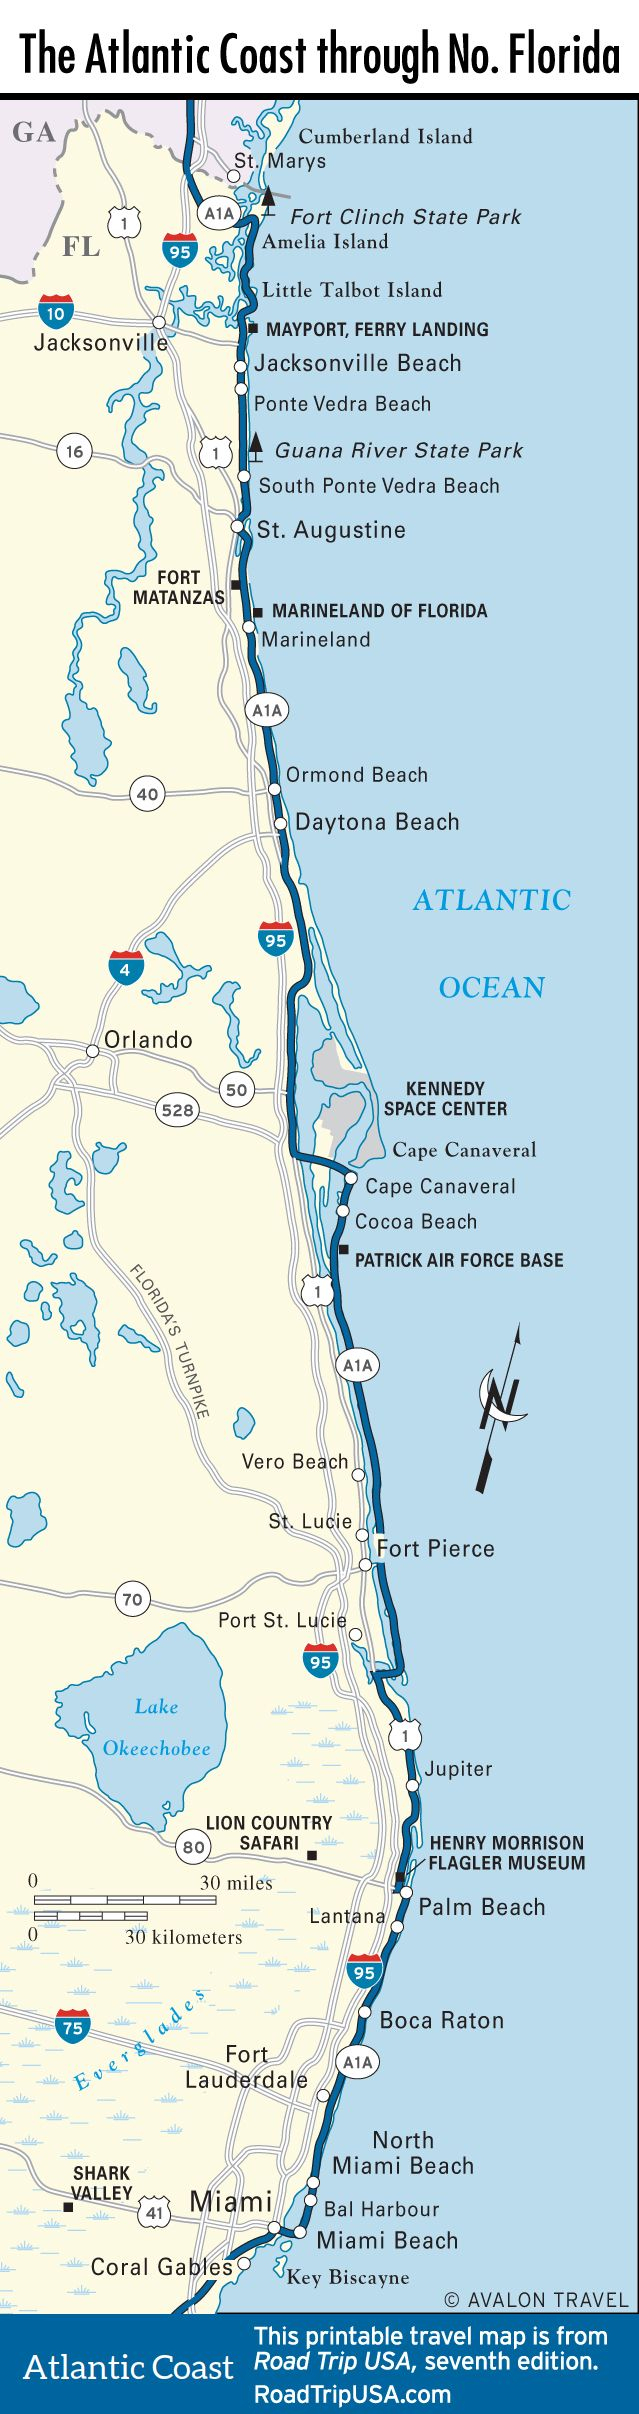 Map Of The Atlantic Coast Through Northern Florida. | Florida A1A - Map Of Florida Coast Beaches